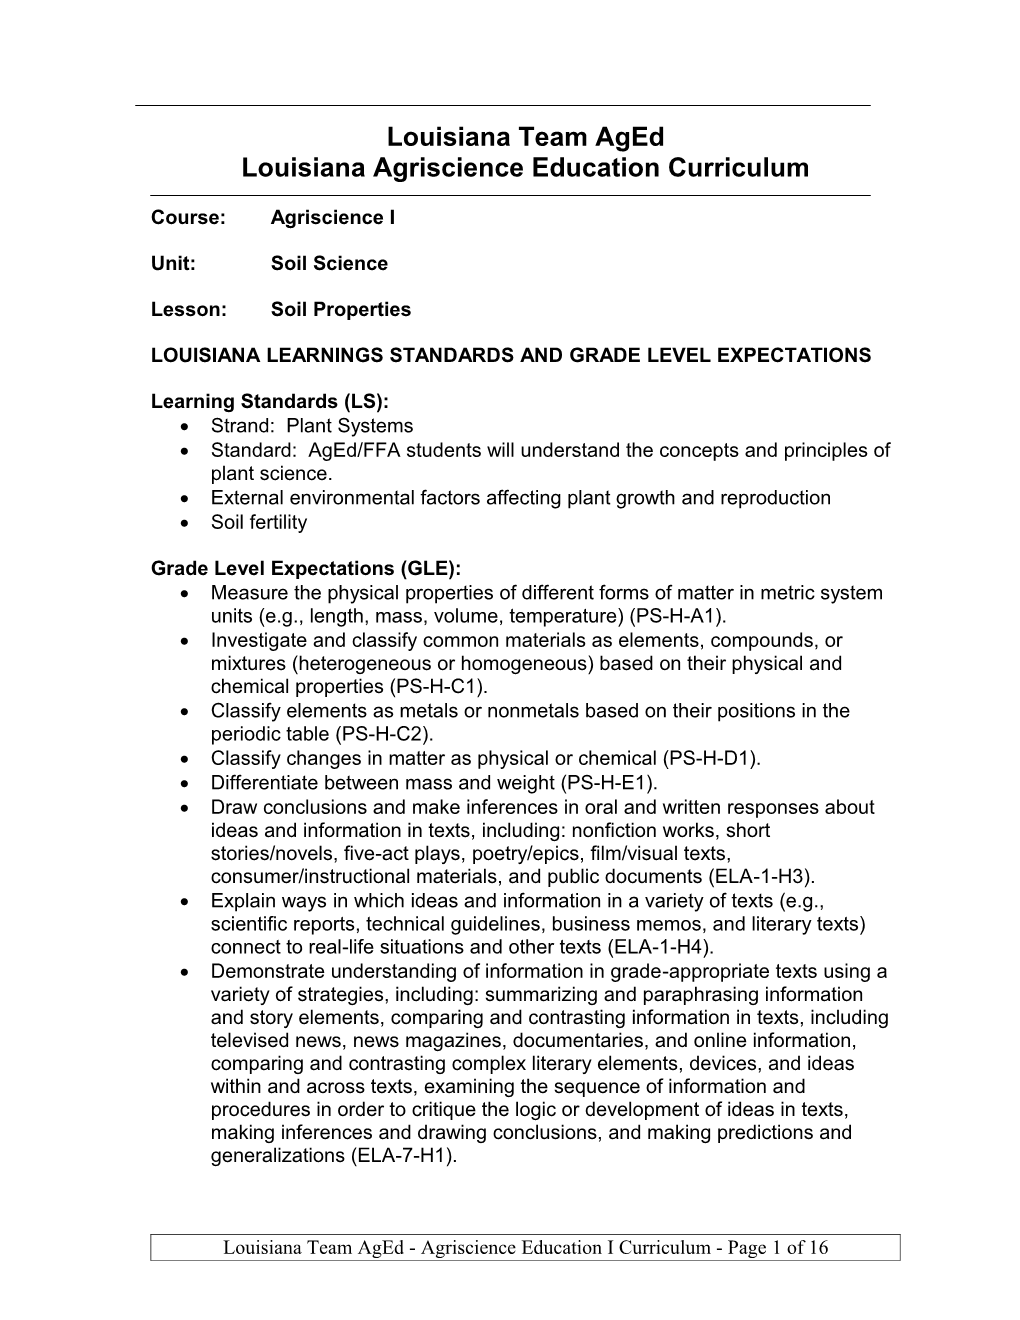 Louisiana Agriscience Education Curriculum